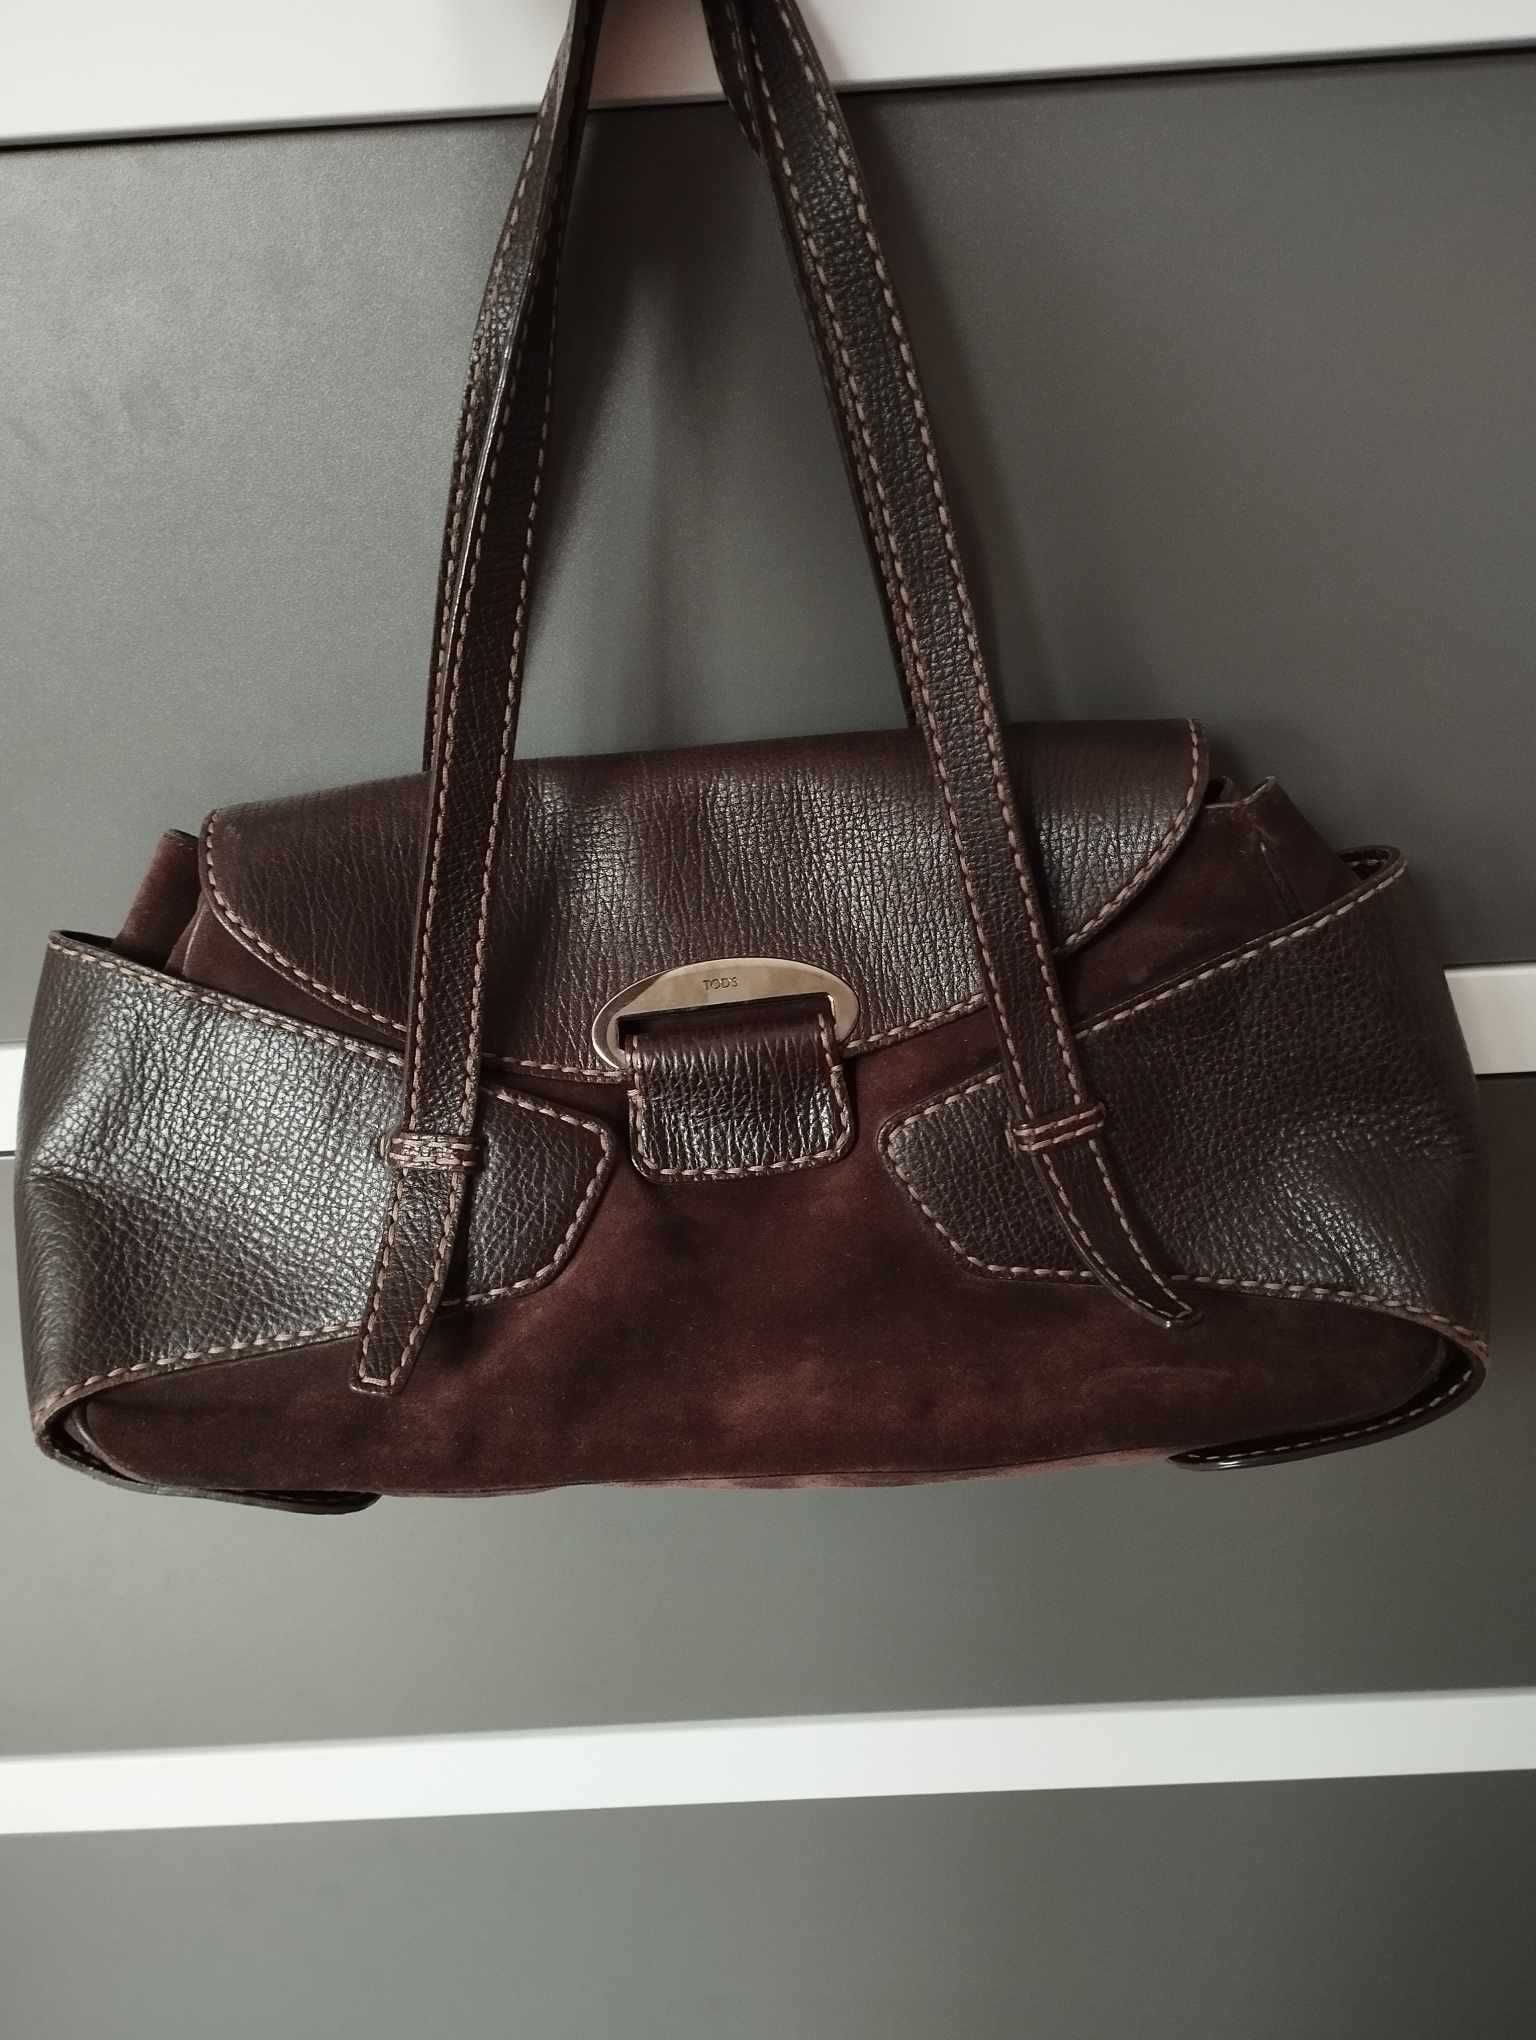 Tods Leather Bag luksusowa torebka Made in Italy drogie w sklepach